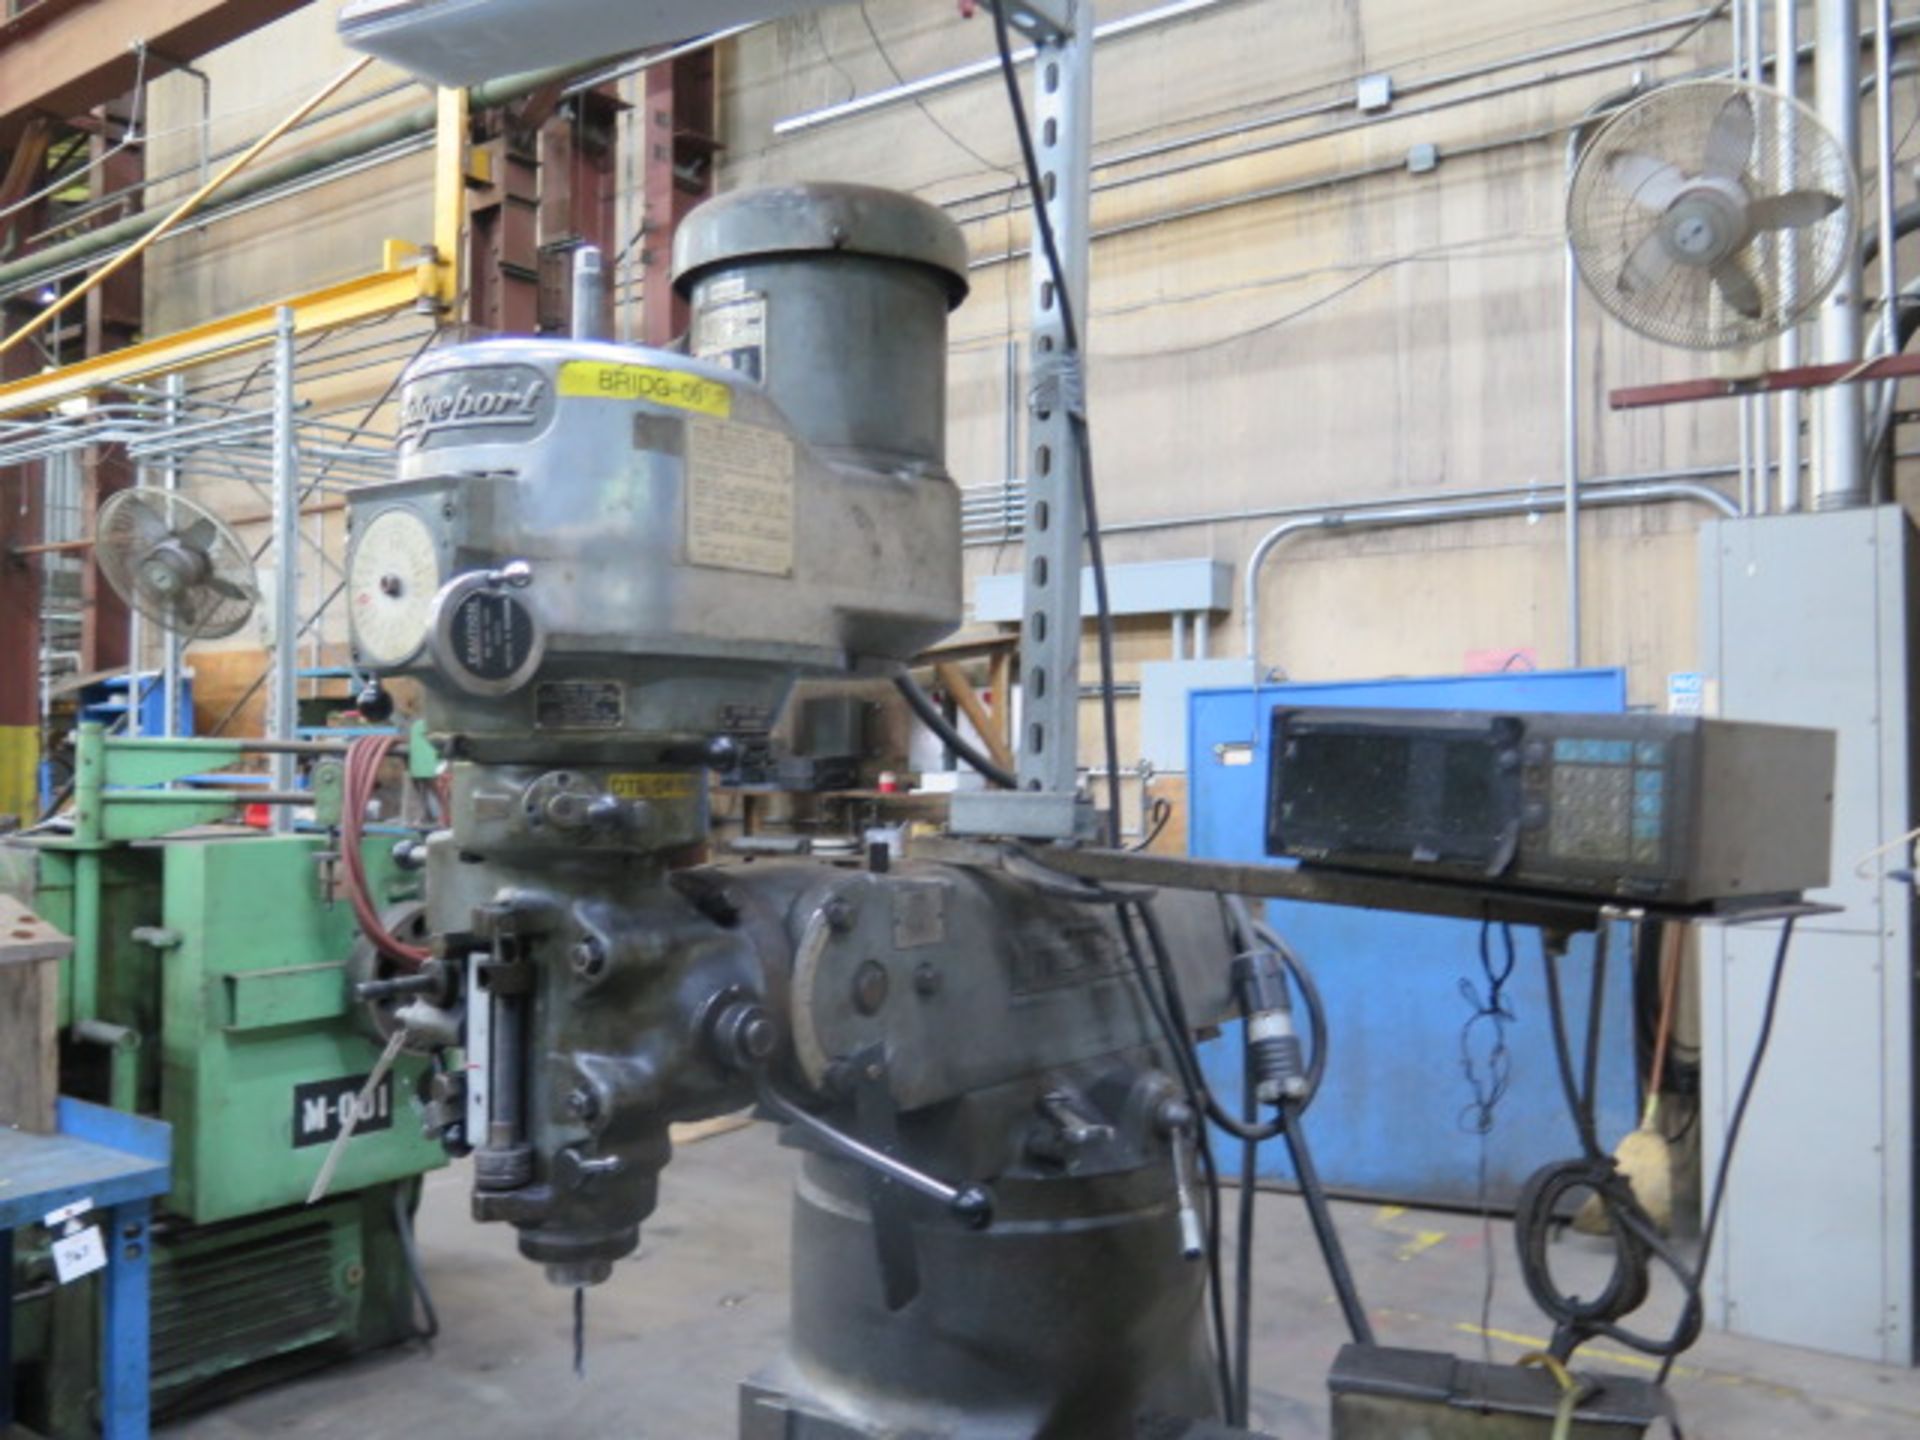 Bridgeport Vertical Mill s/n 201569 w/ Sony DRO, 2Hp Motor, 60-42” ial Change RPM, SOLD AS IS - Image 4 of 12